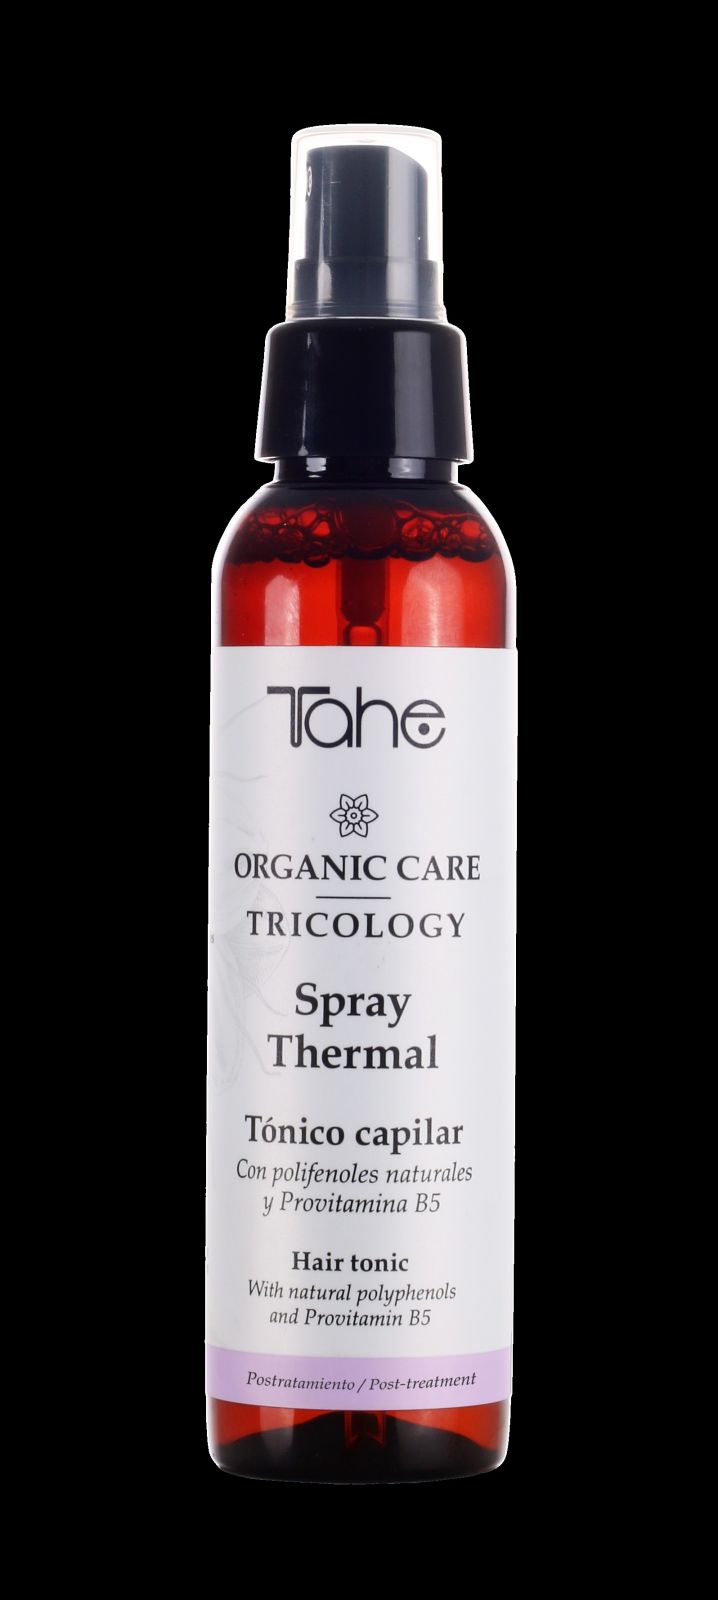 Tonico capilar (125 ml) TAHE